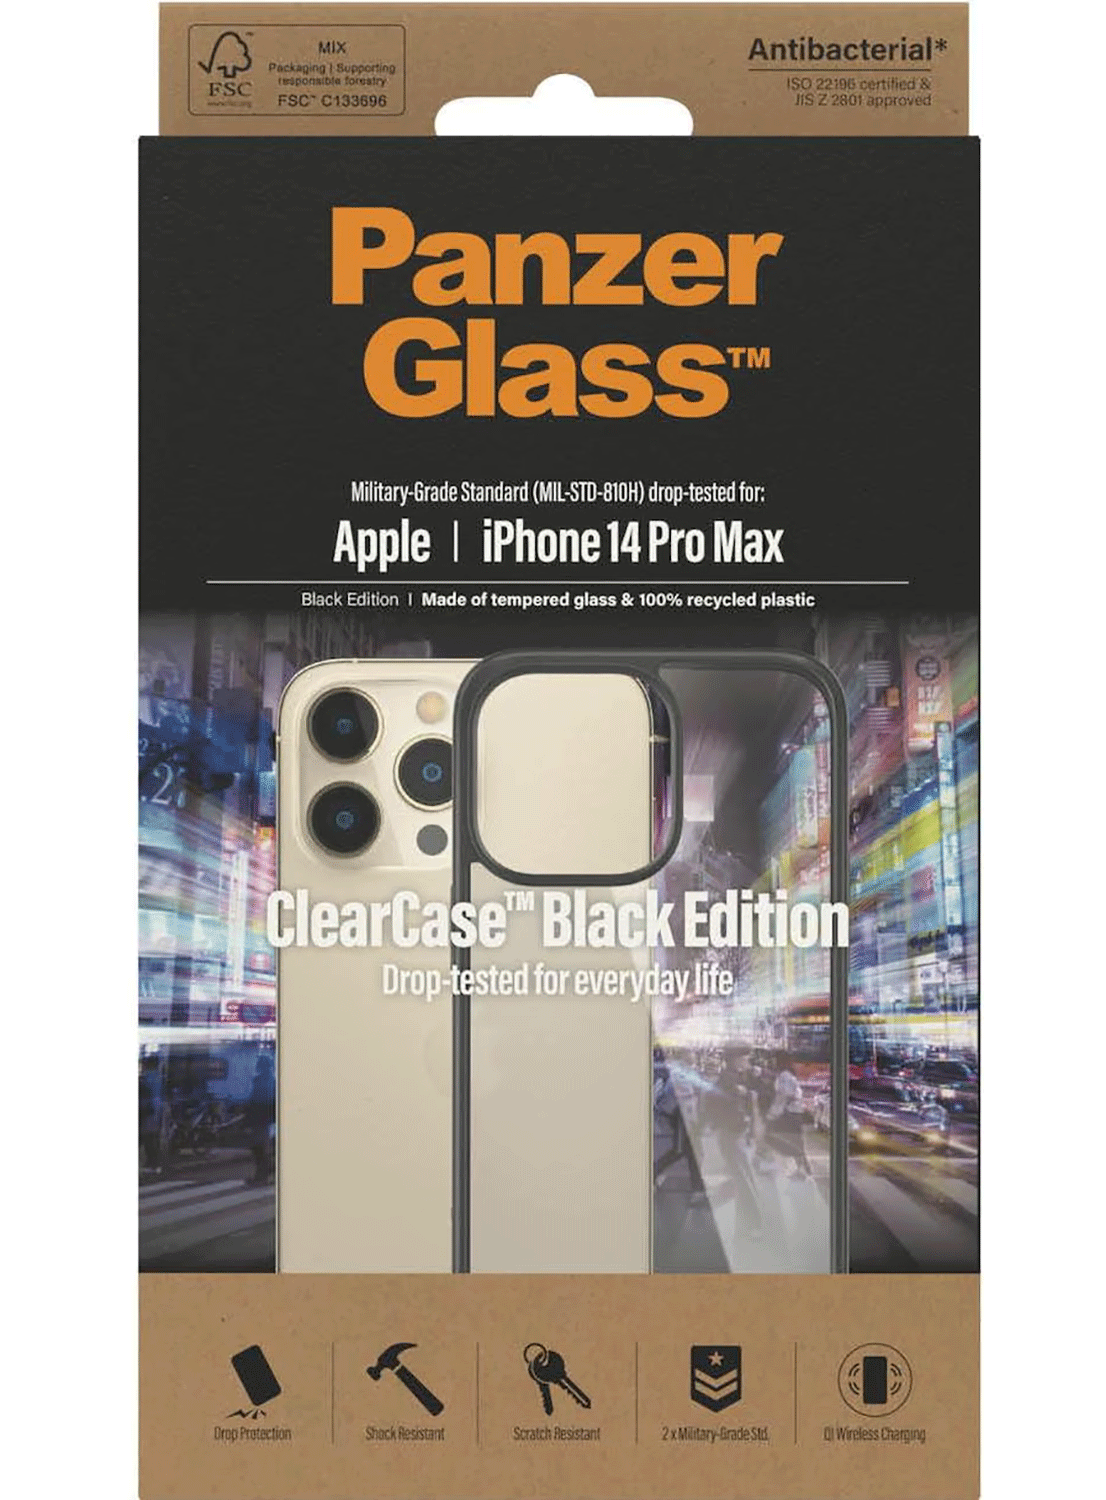 Pan­zer­Glass Clear Case Black Edition für Apple iPhone 14 Pro Max